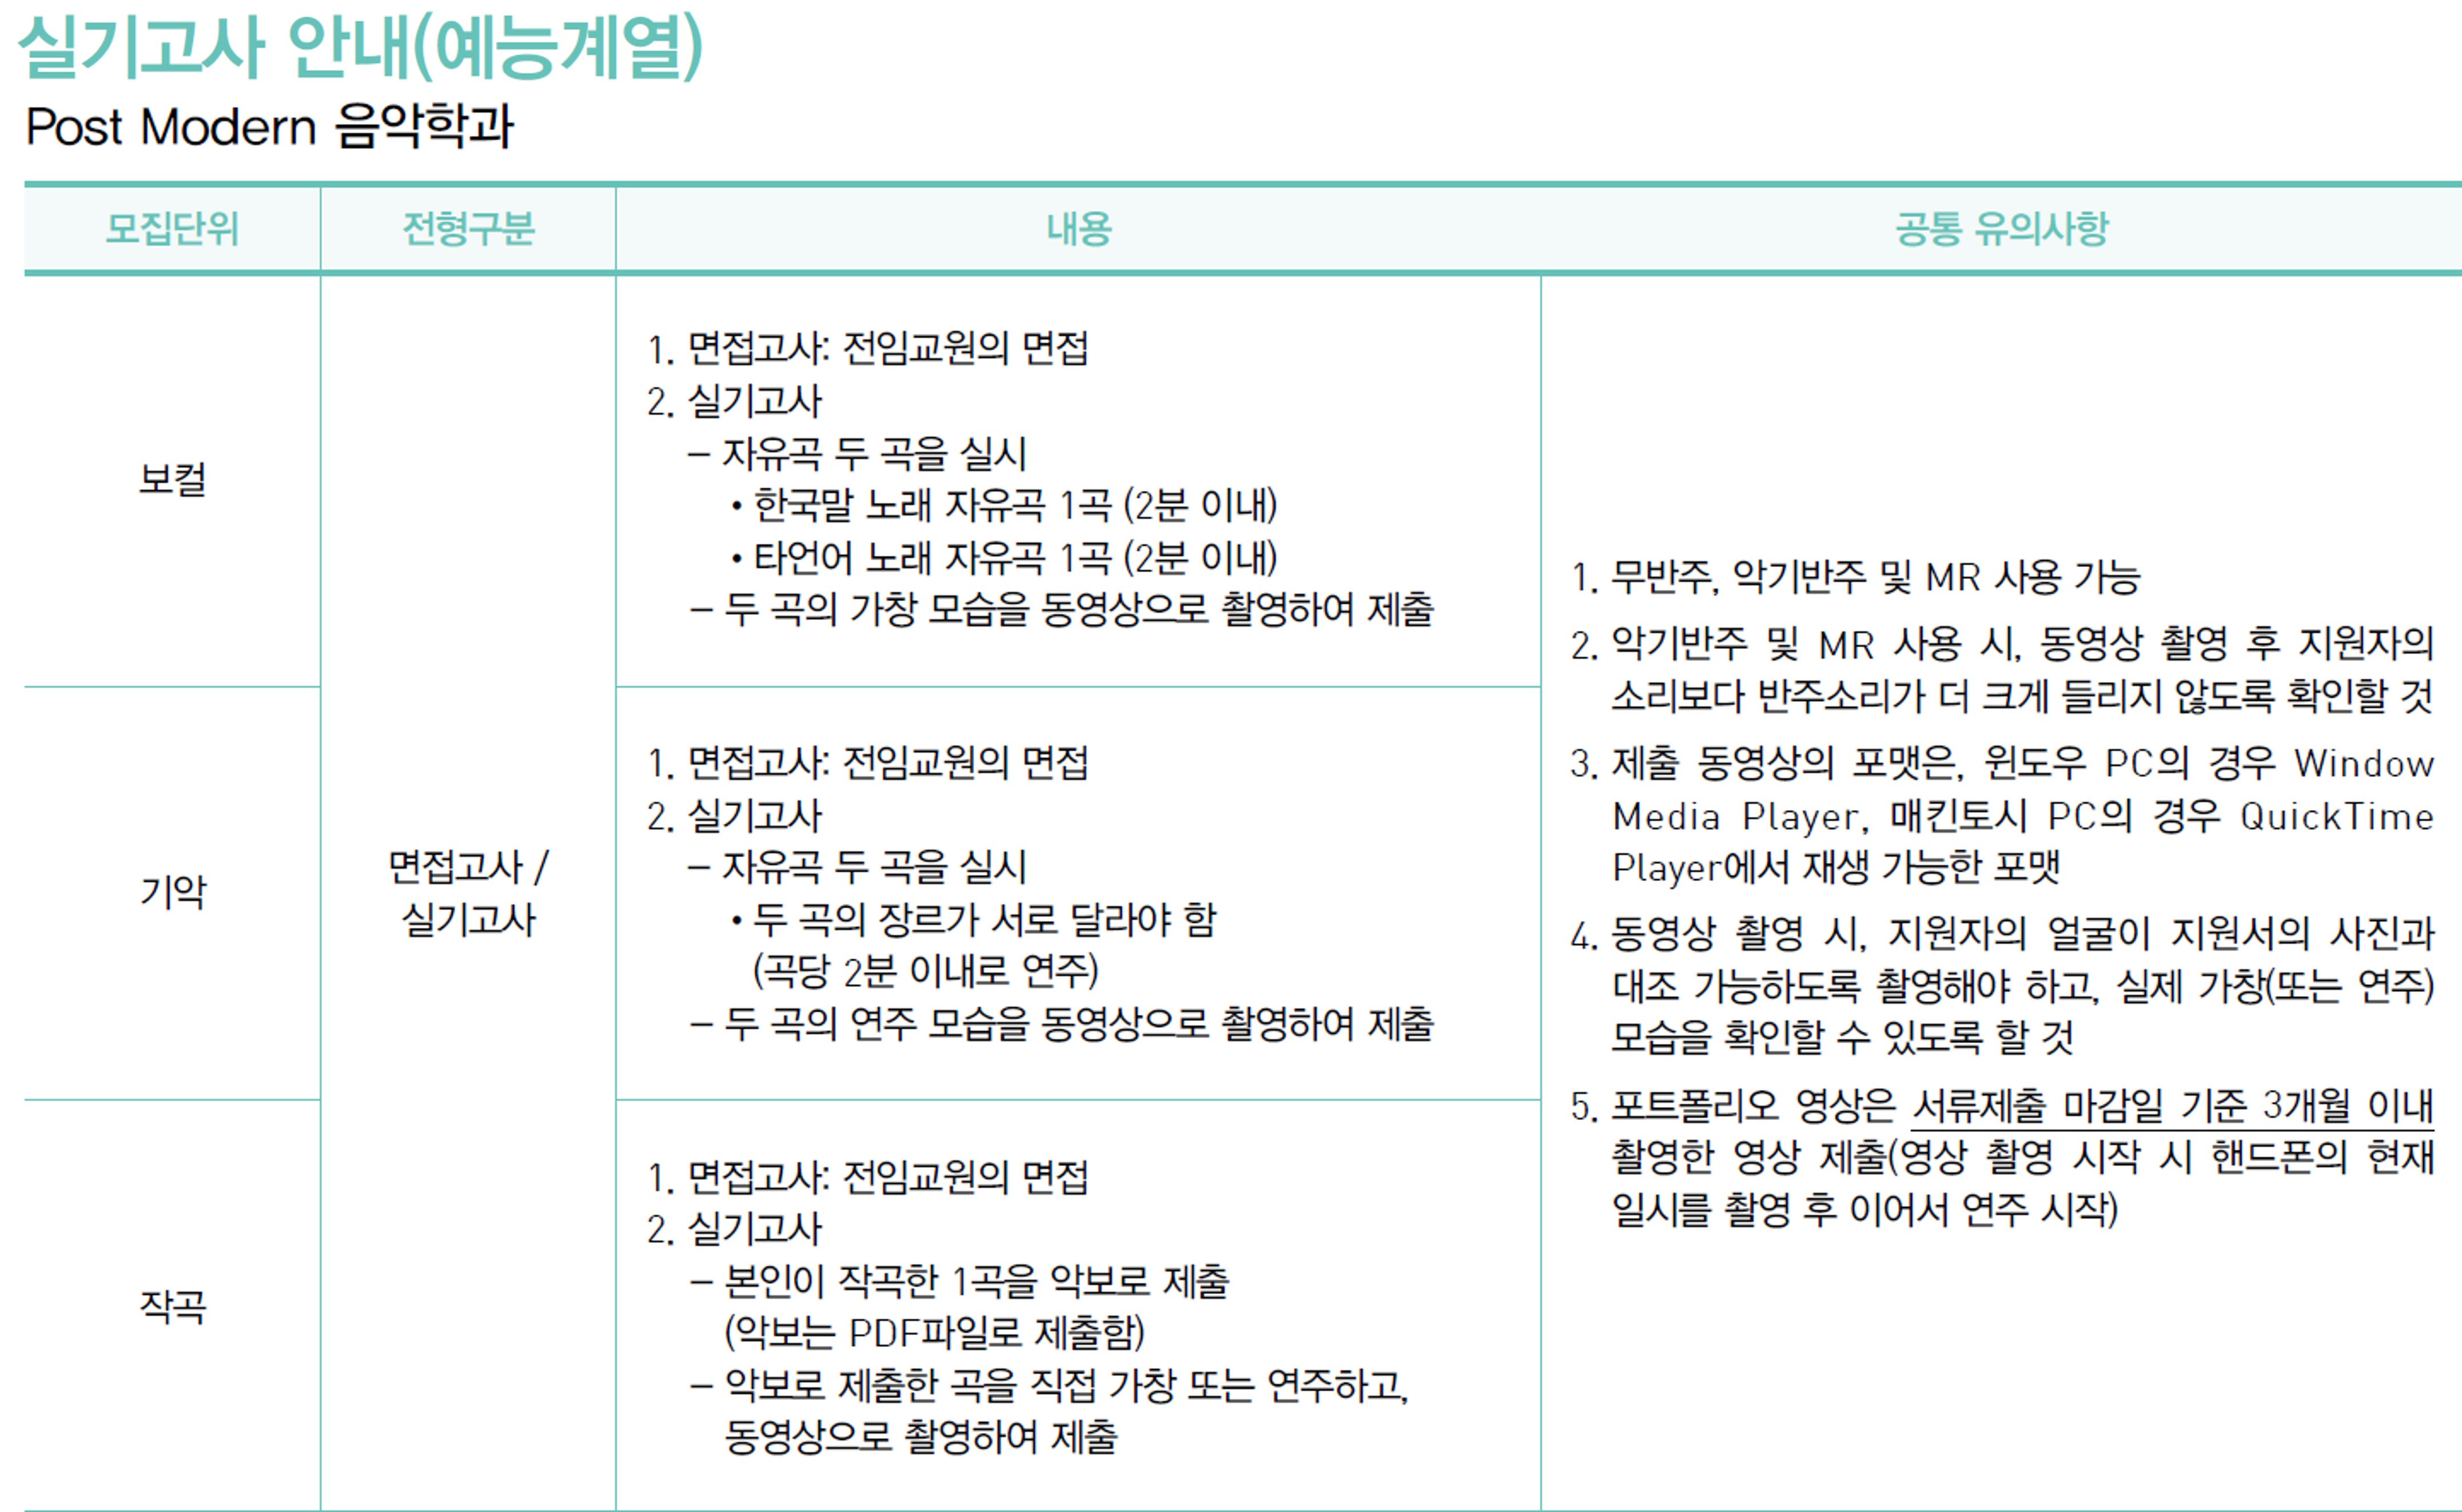 Kyung Hee University Foreign Student Admission Admission Factors_English Version 경희대 외국인전형 전형방법_영어본_03_전형방법.jpg